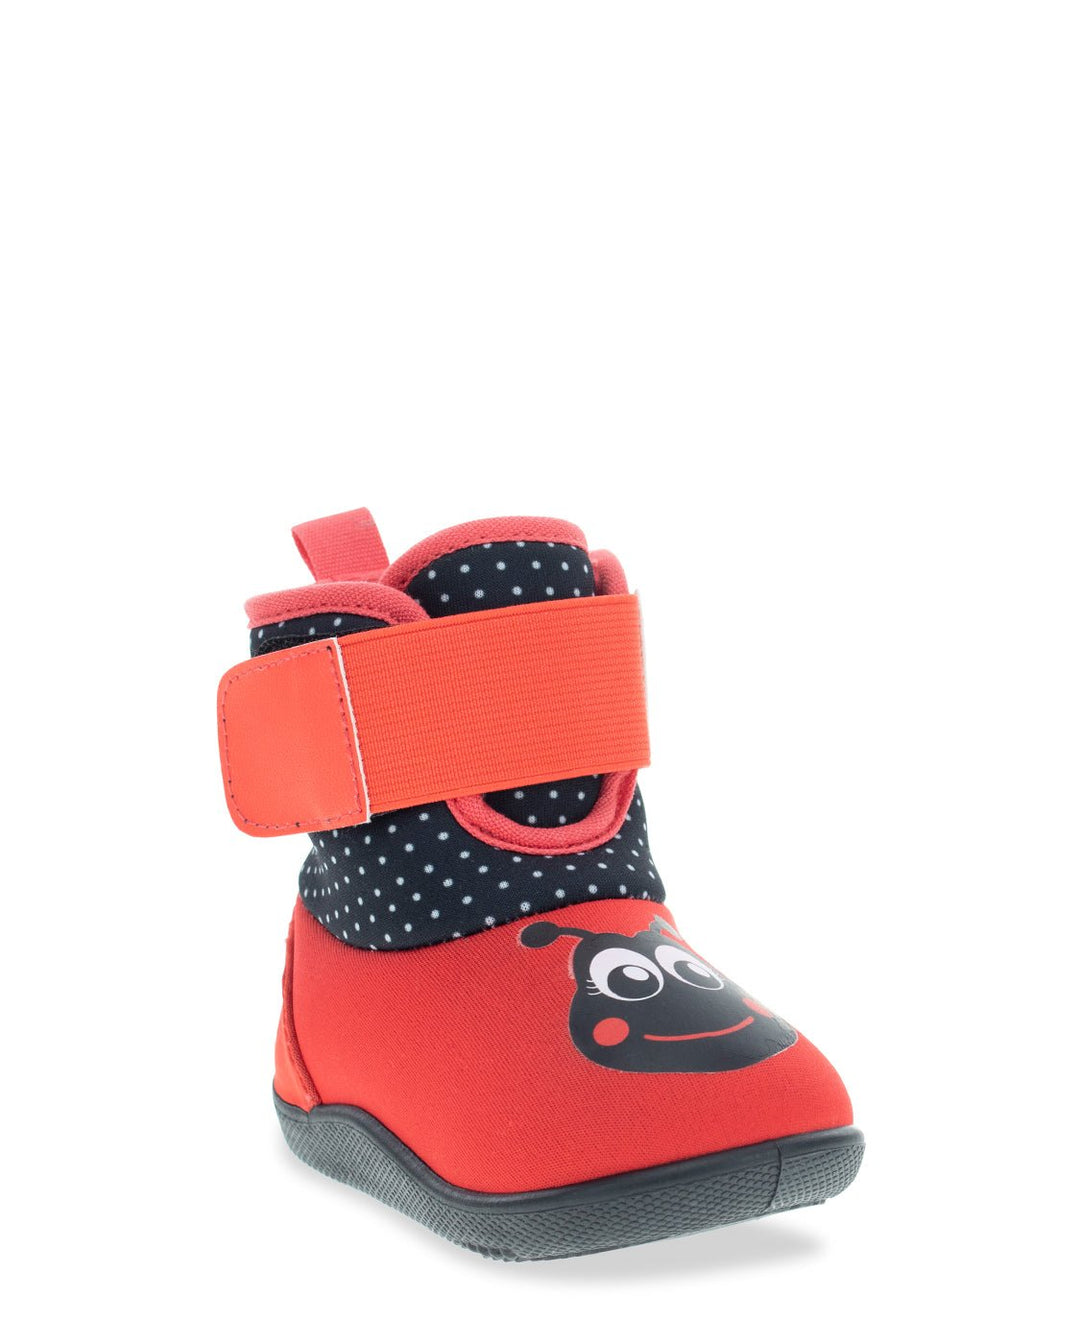 Kids Lucy Ladybug Baby Boot - Red - WSC B2B